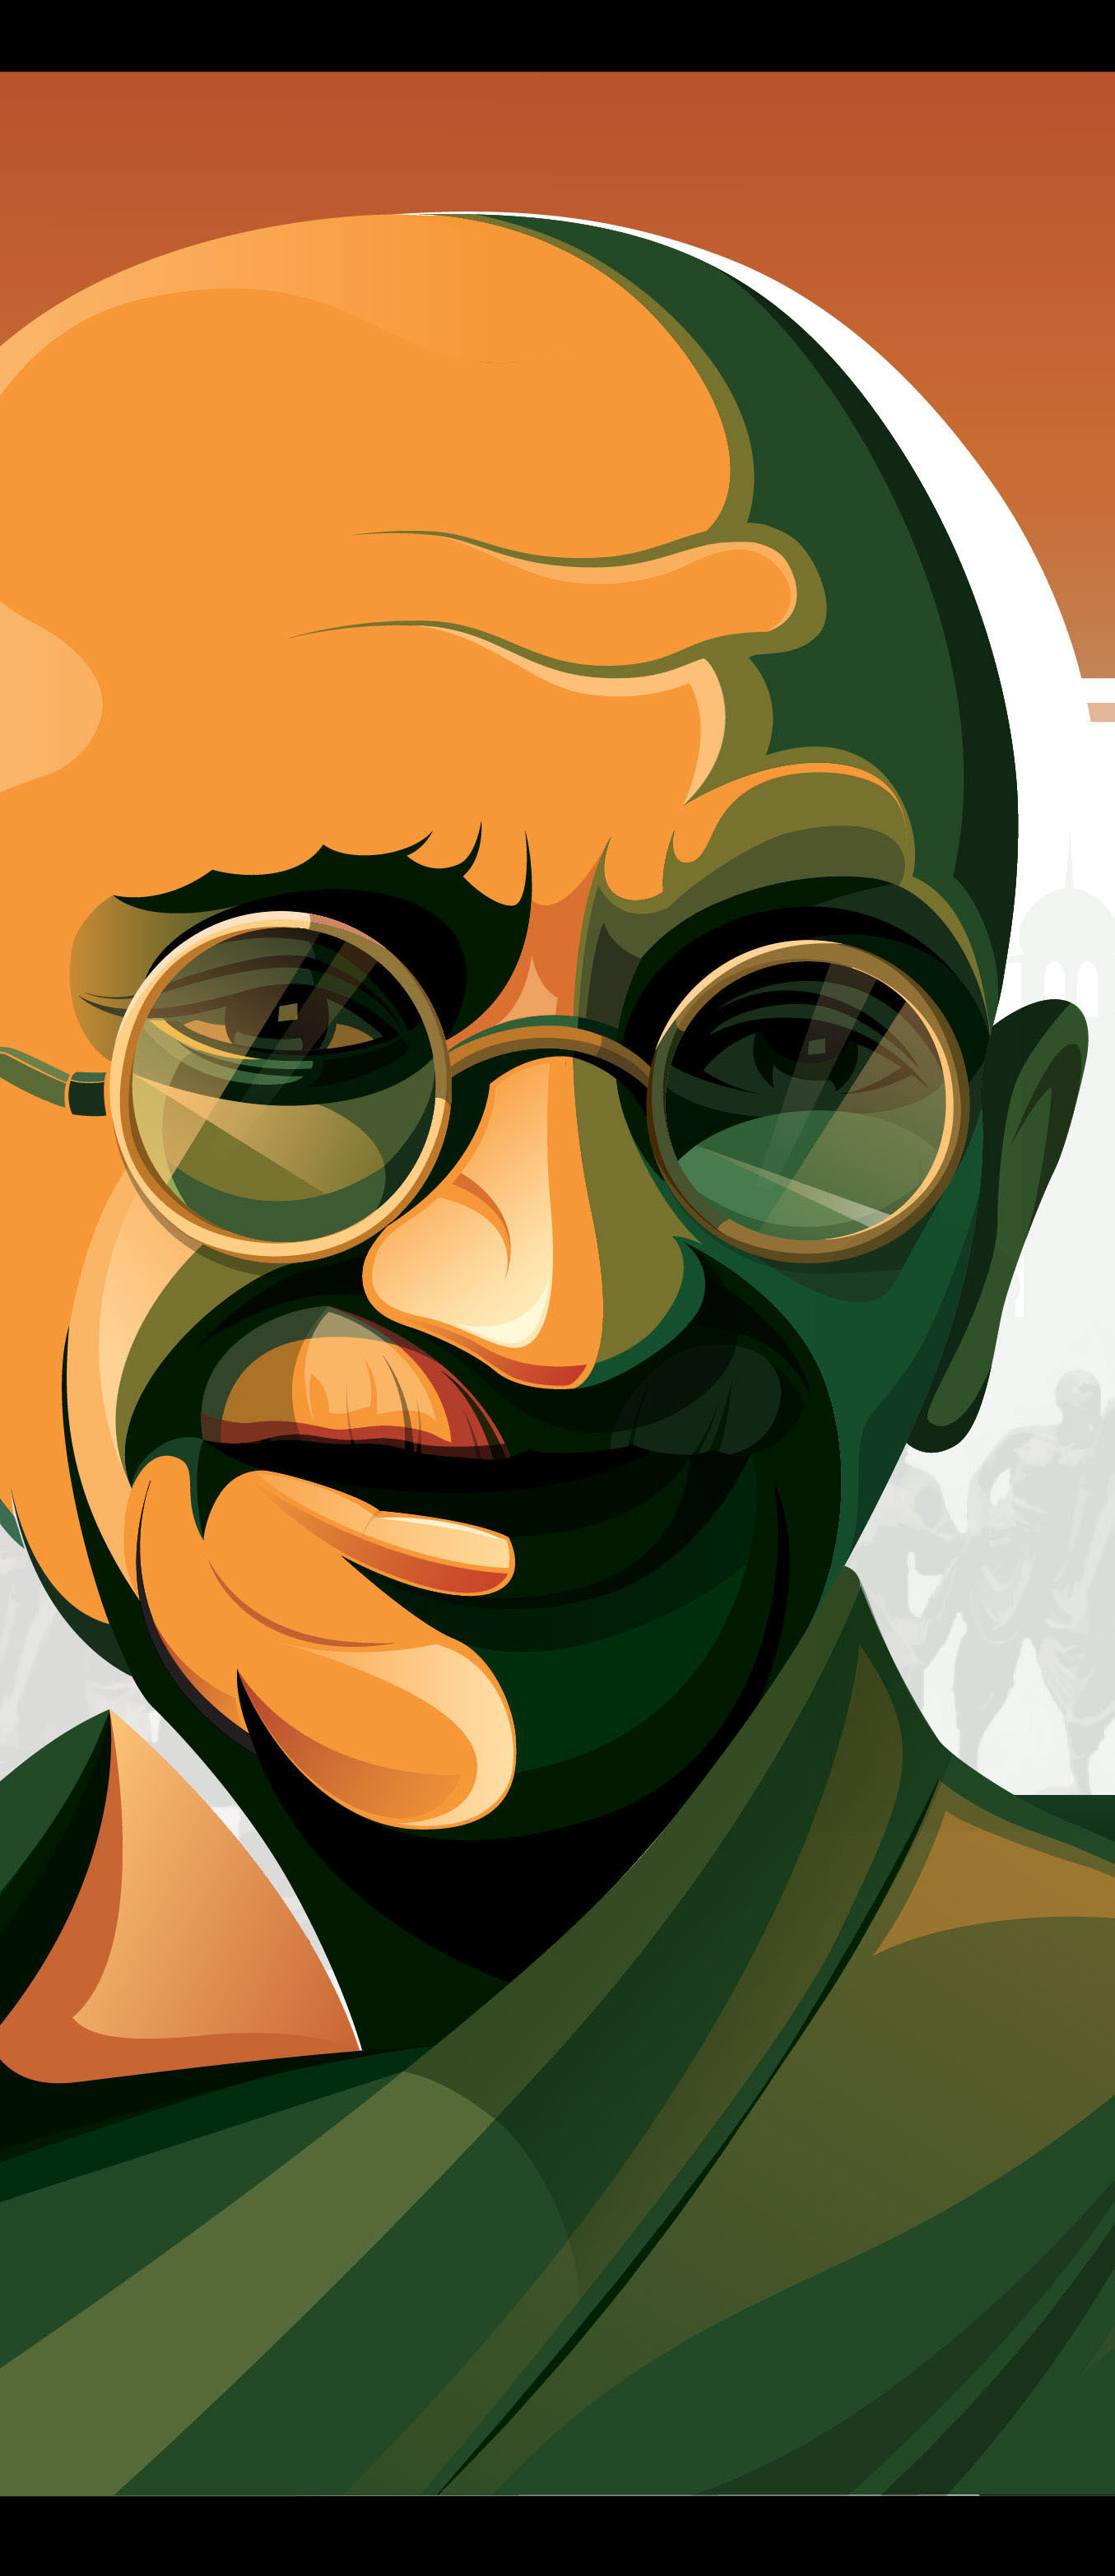 Stylized Portrait - Mahatma Gandhi | Behance